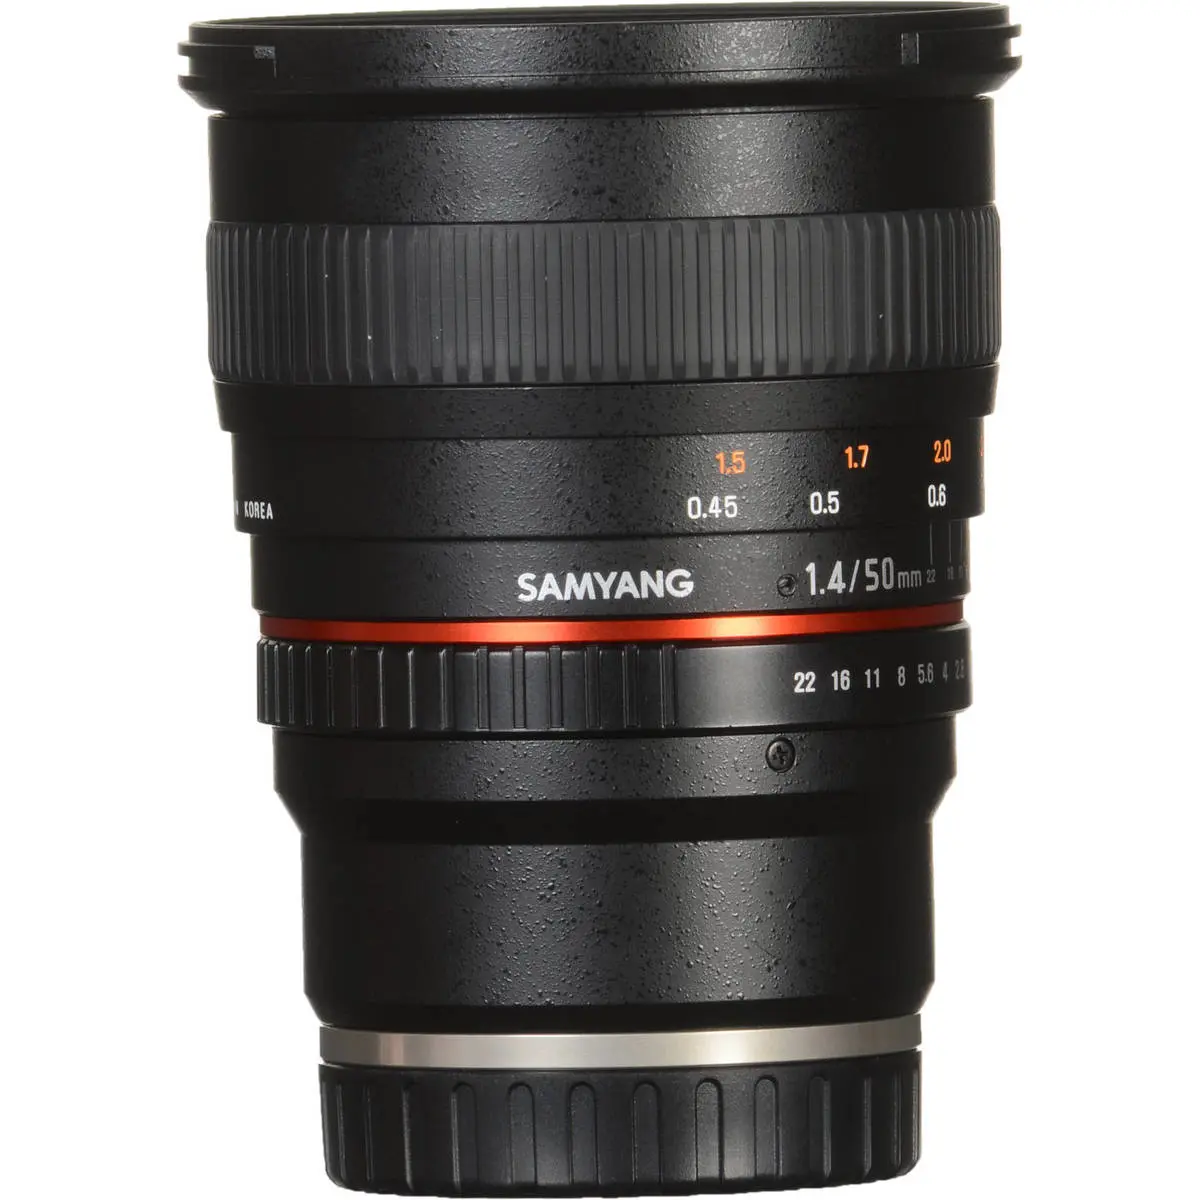 7. Samyang 50 mm f/1.4 AS UMC (Sony A) Lens